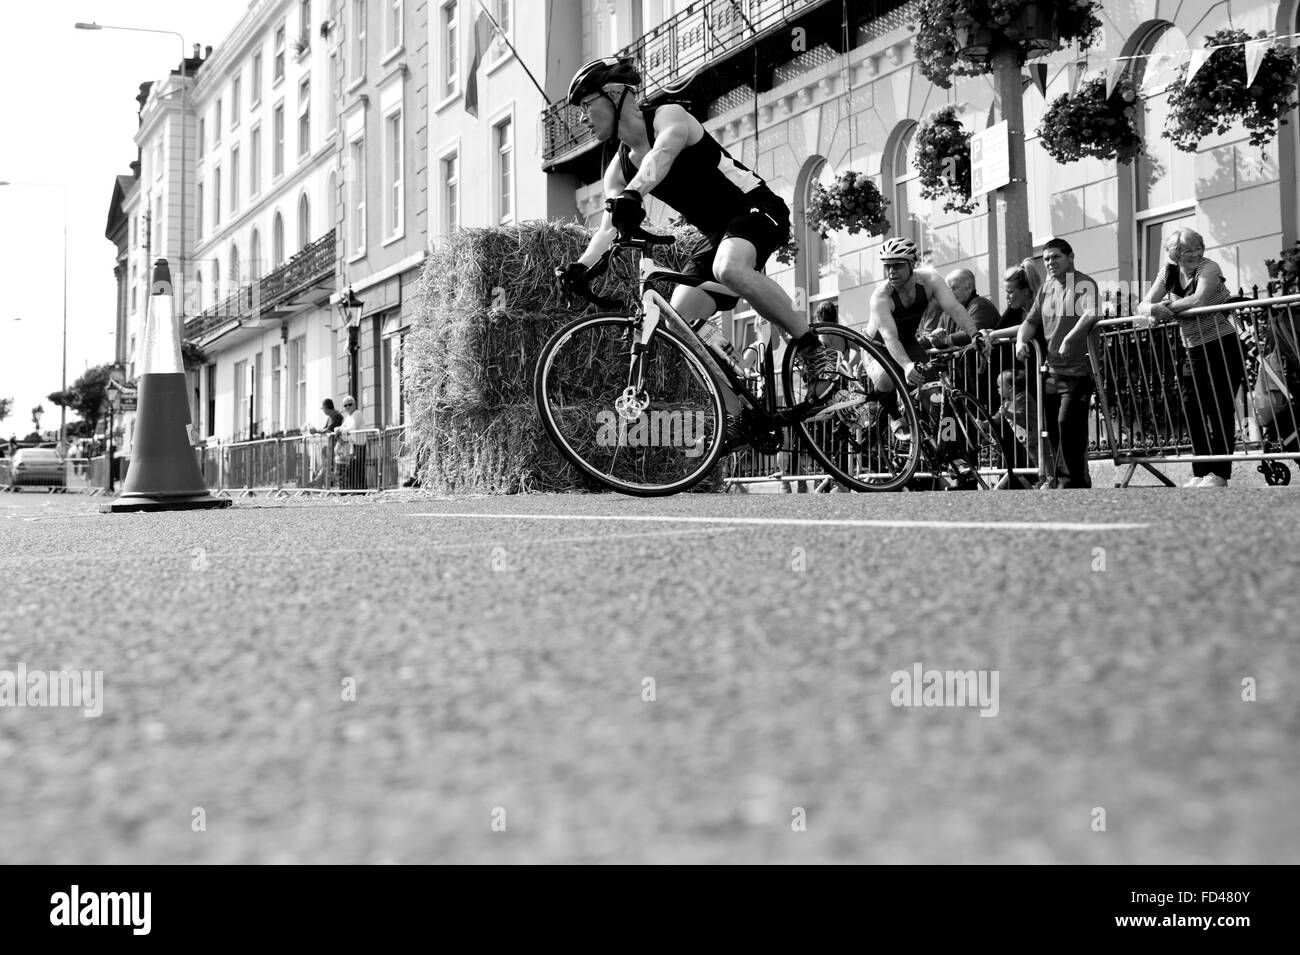 Triathlete makes the turn in the Cobh Triathlon held in Cobh, County Cork, Ireland. Stock Photo